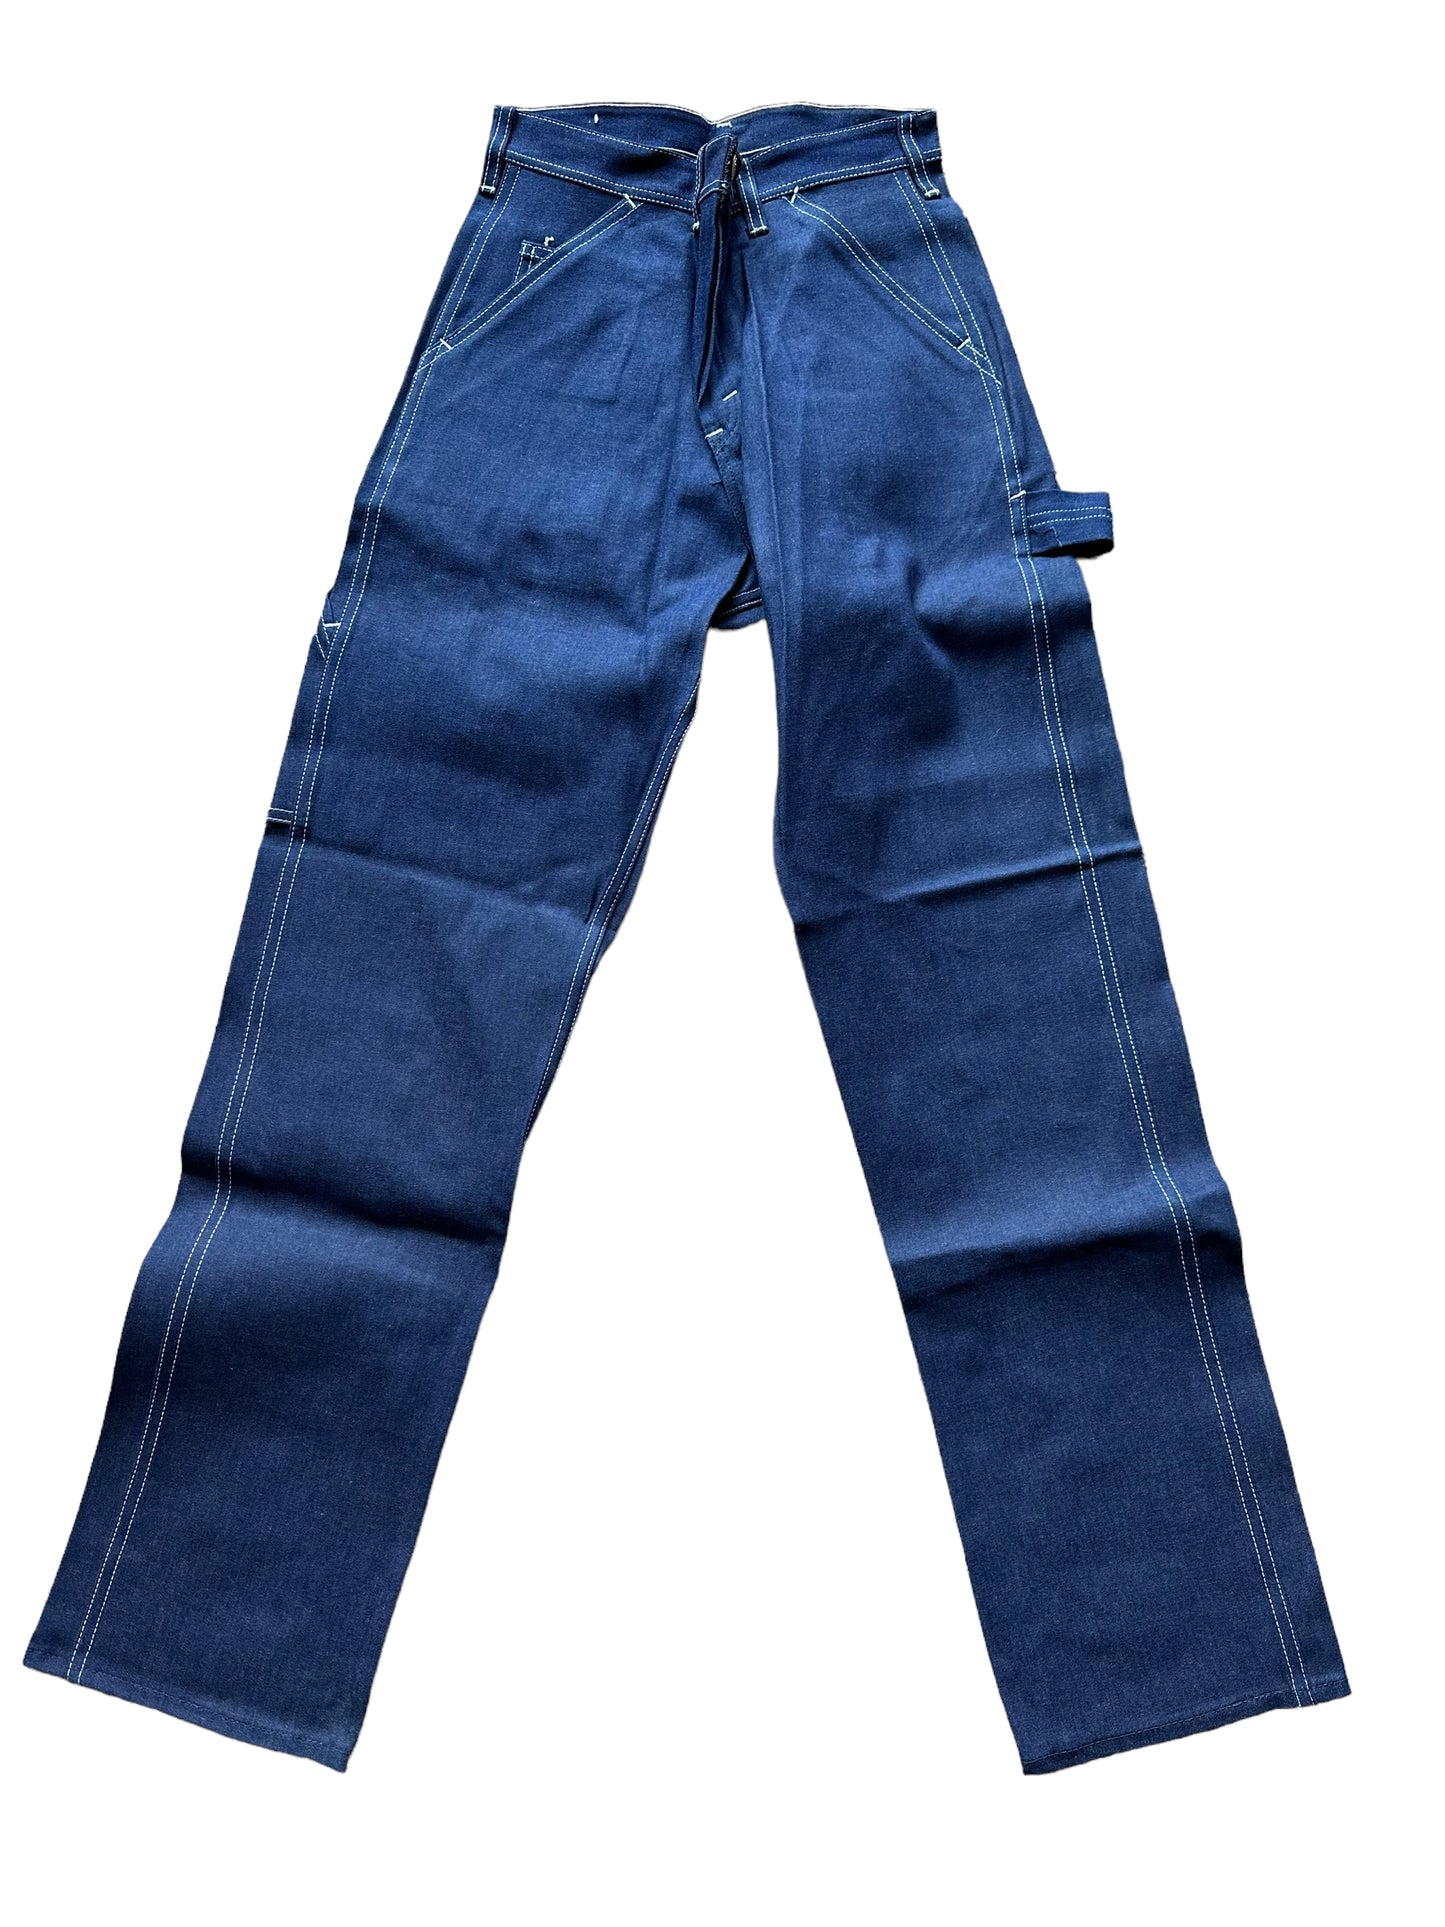 Front View on NOS Vintage Carter's Carpenter Jeans W28 L32 | Barn Owl Vintage Workwear Seattle